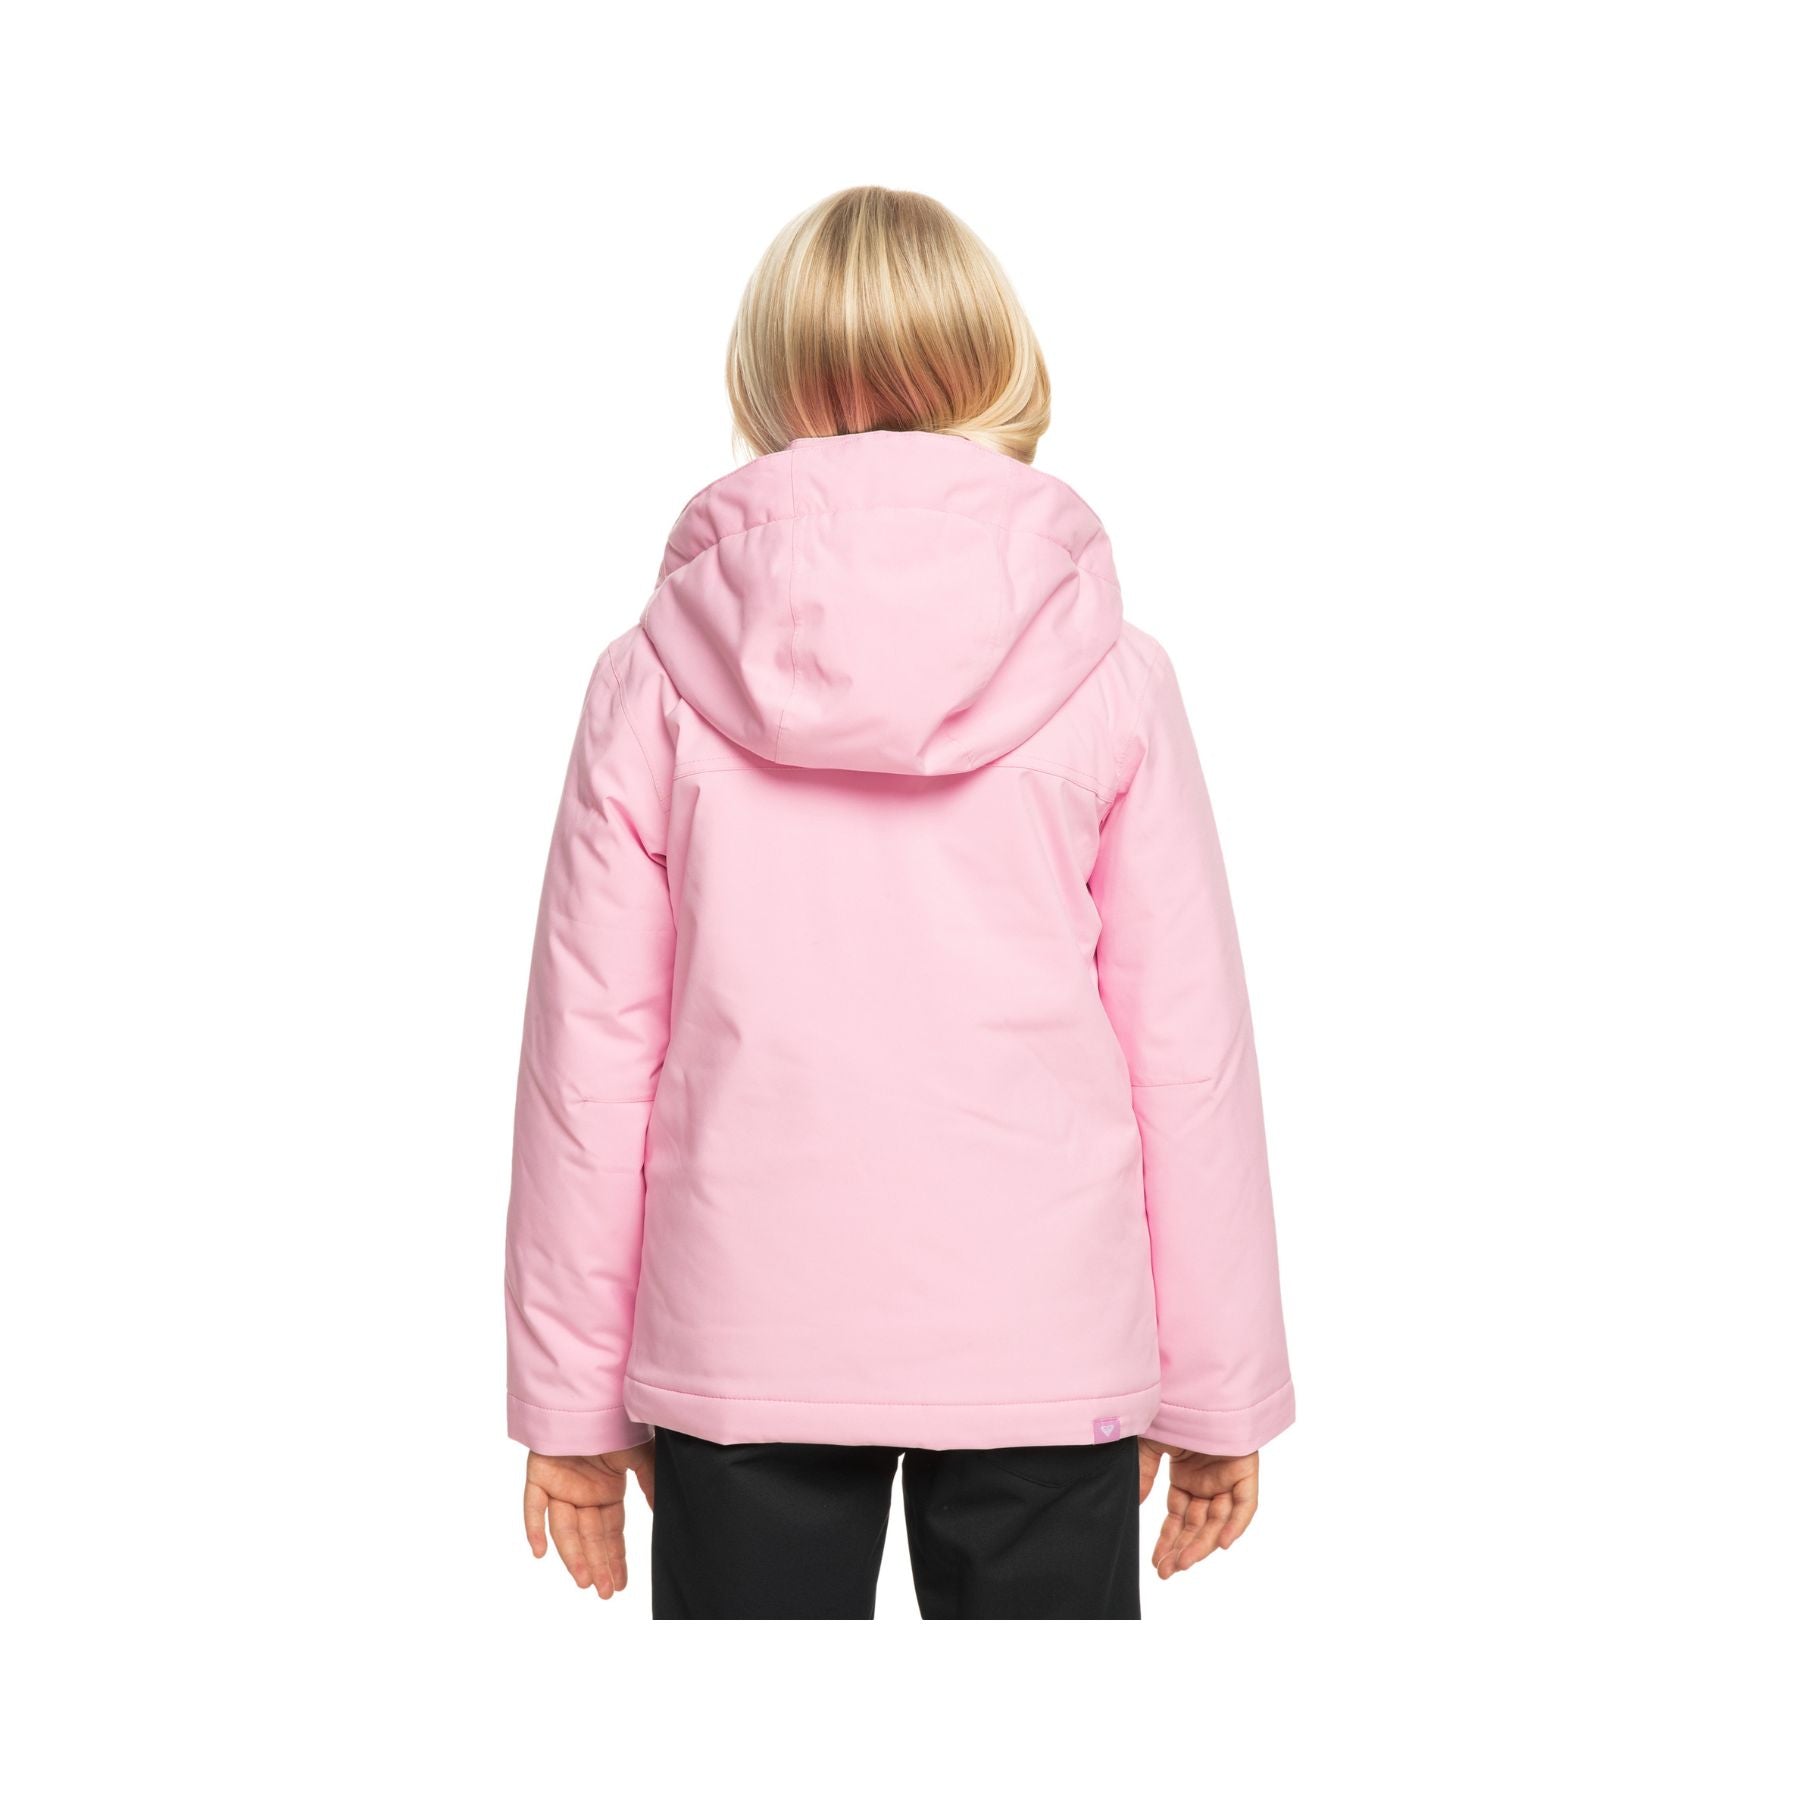 Roxy Galaxy Girls Jacket in Pink Frosting